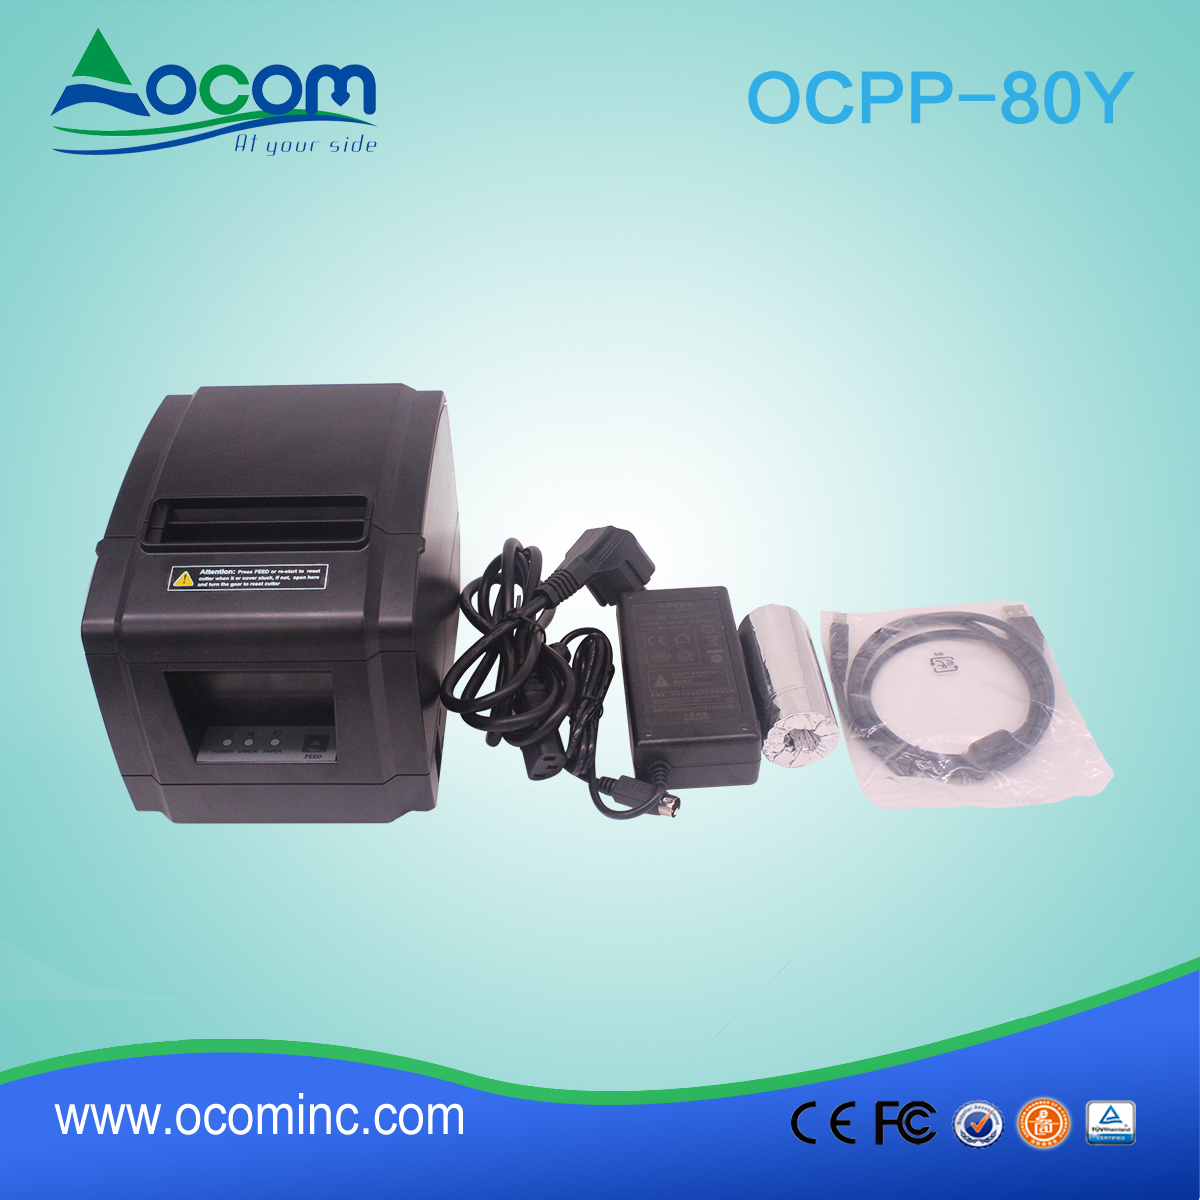 OCPP-80Y-China produziu uma impressora térmica de 80mm de baixa perda